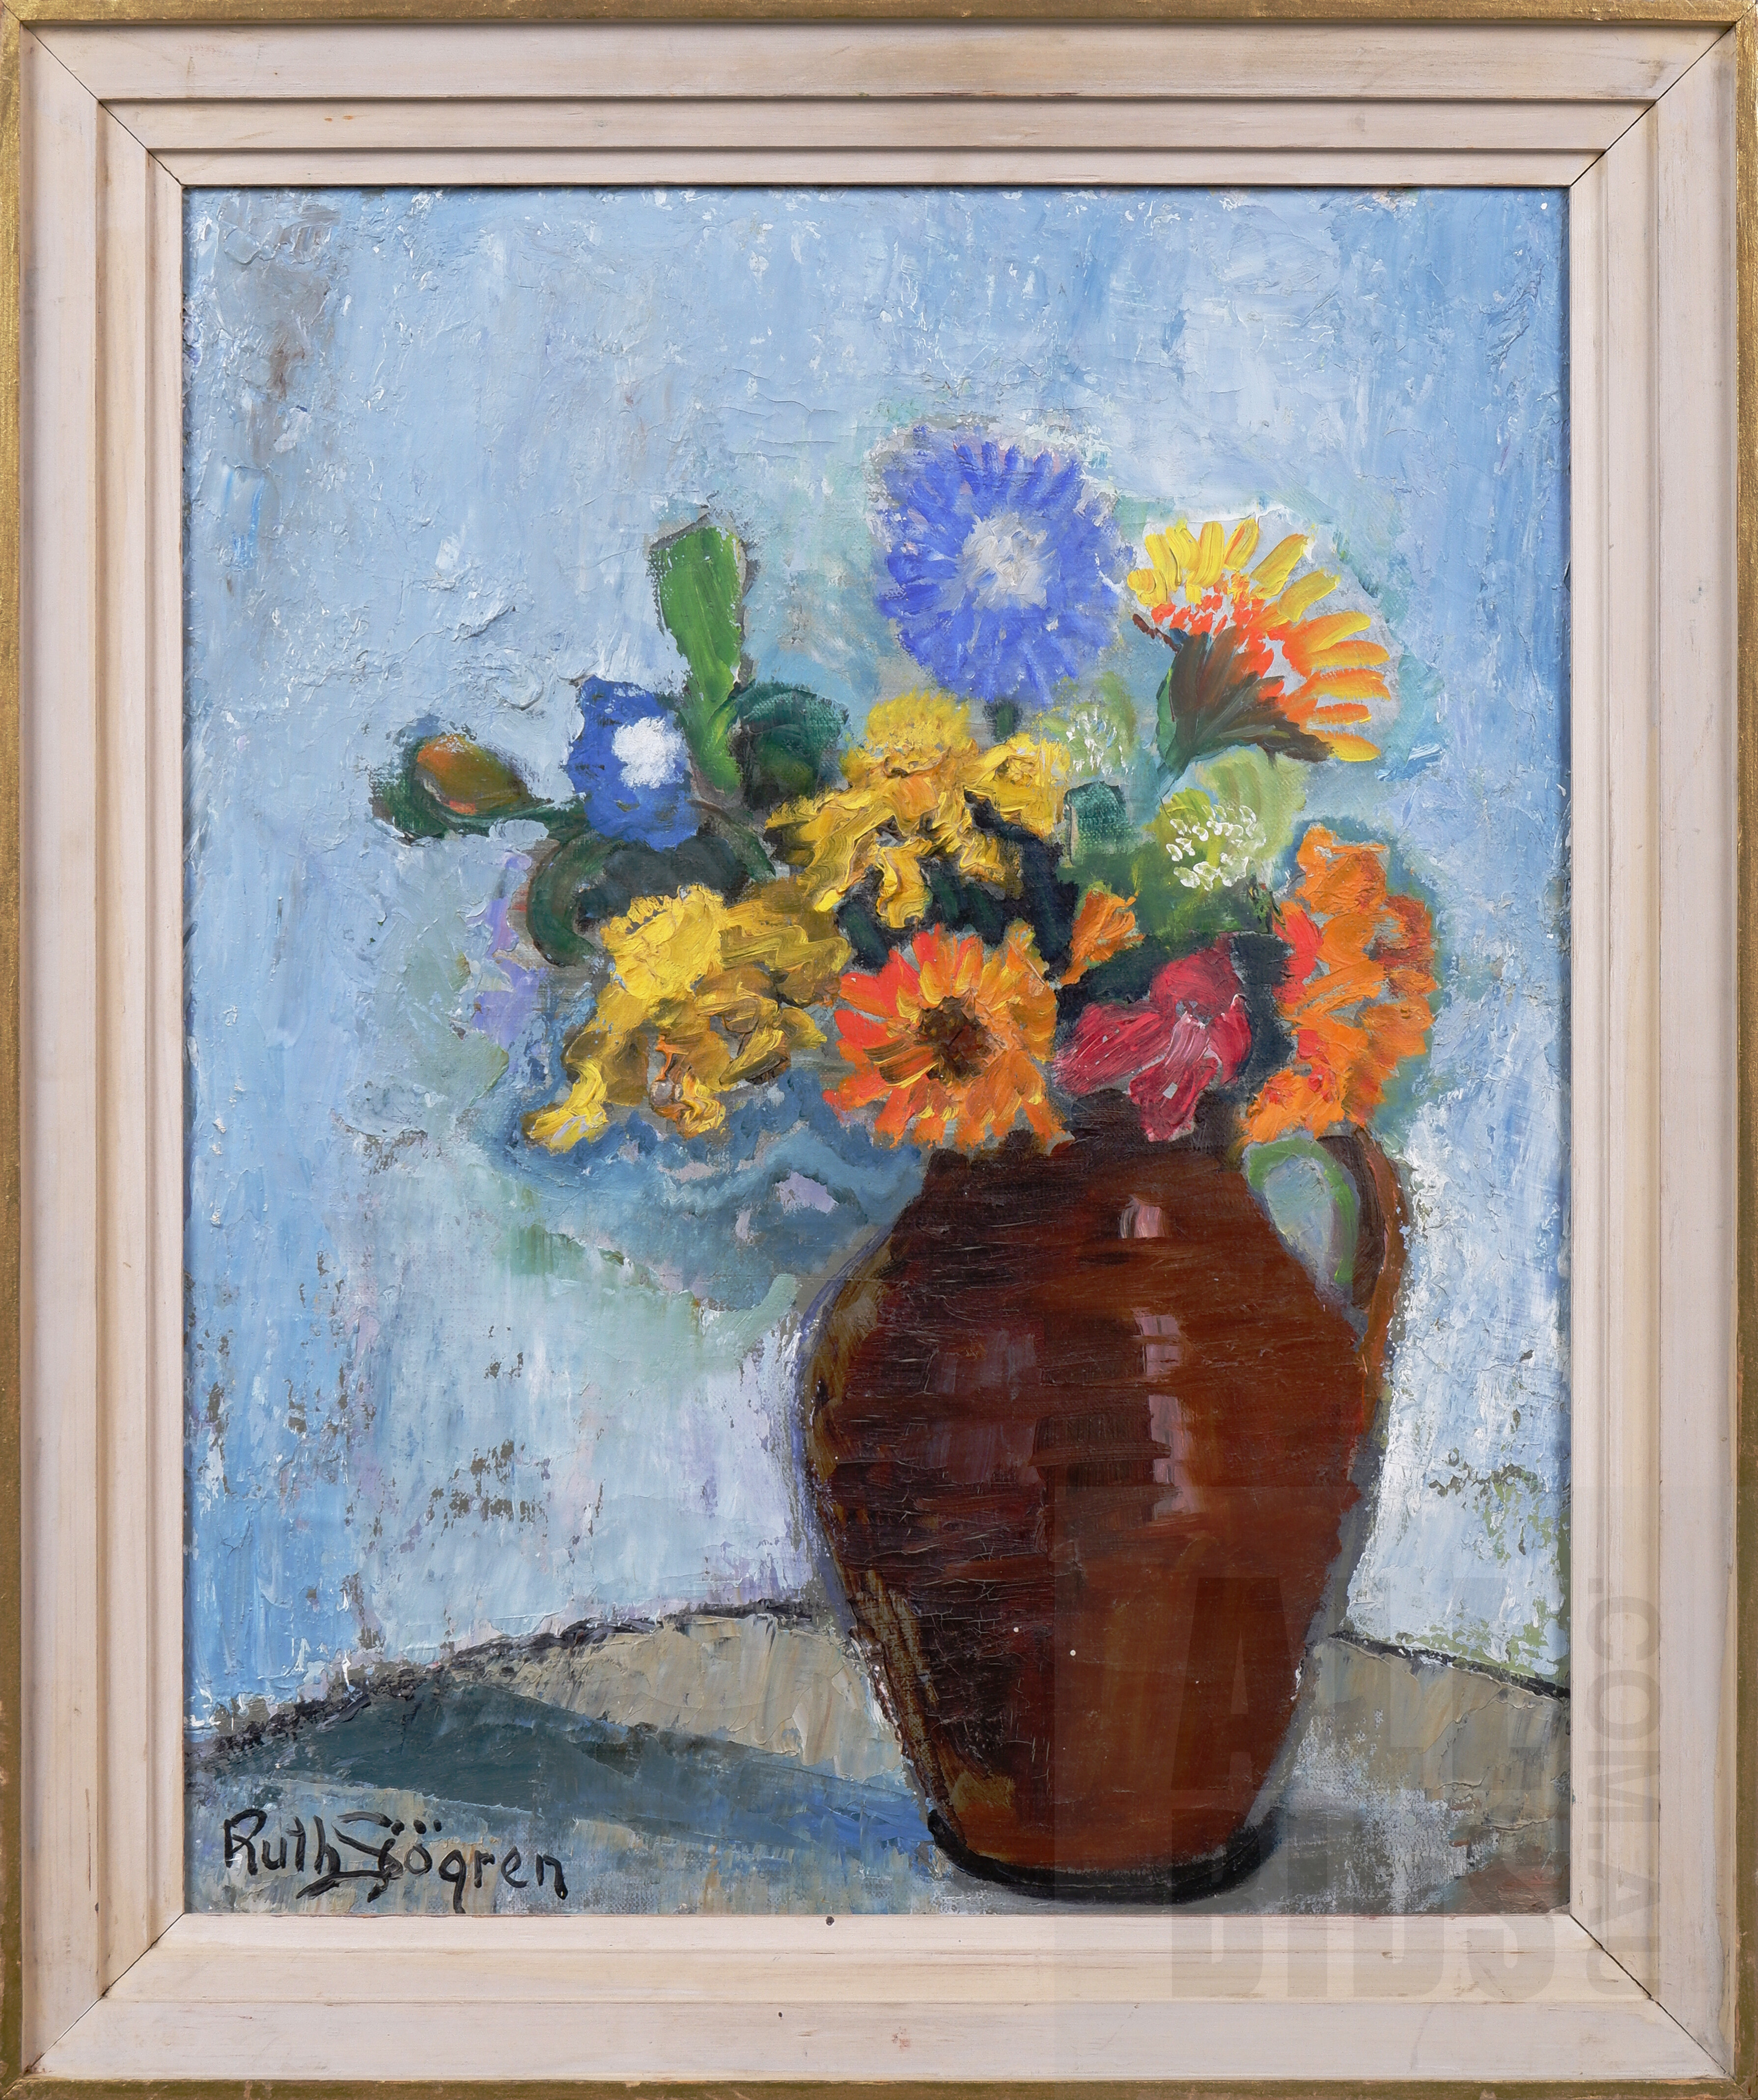 'Ruth Sjogren (1885-1978, Swedish), Still Life with Flowers, Oil on Canvas, 48 x 40 cm (incl. frame)'